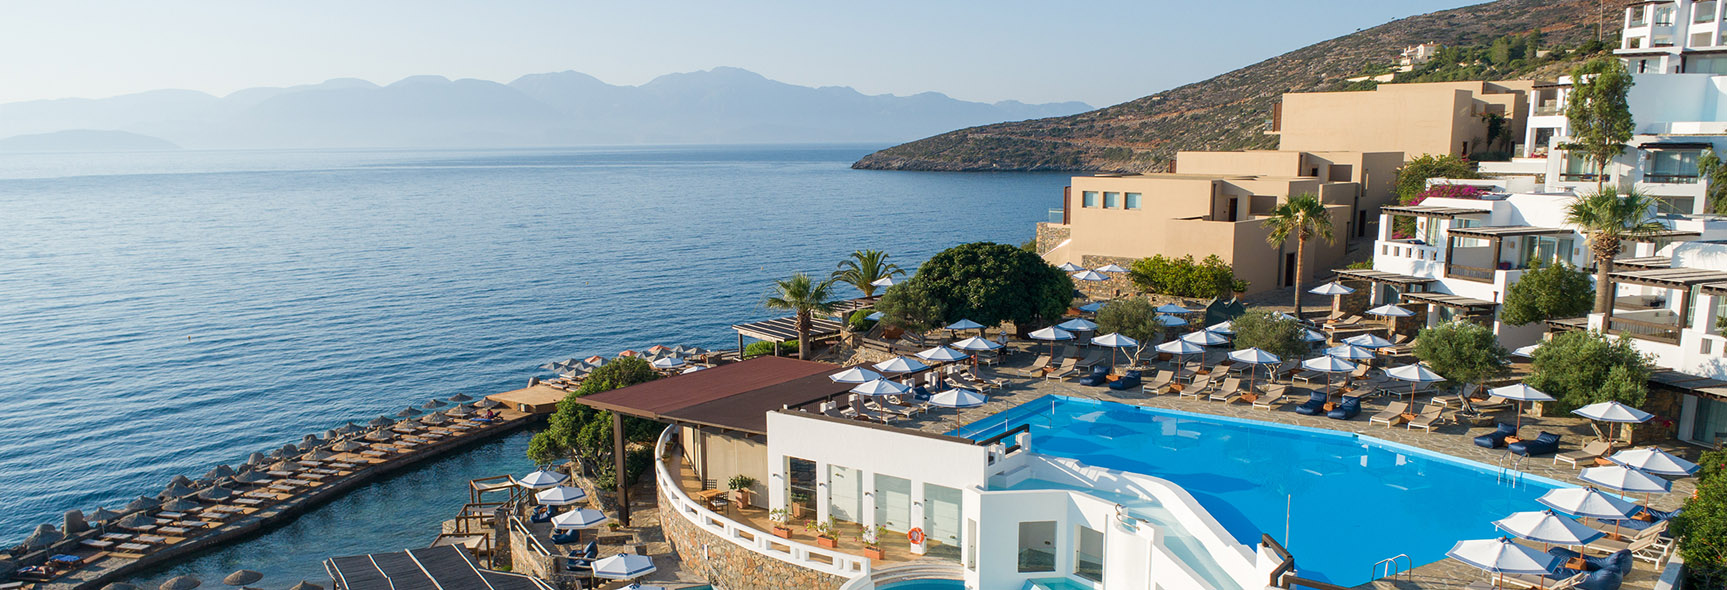 Aquila Hotels near to Agios Nikolaos, in Elounda Crete